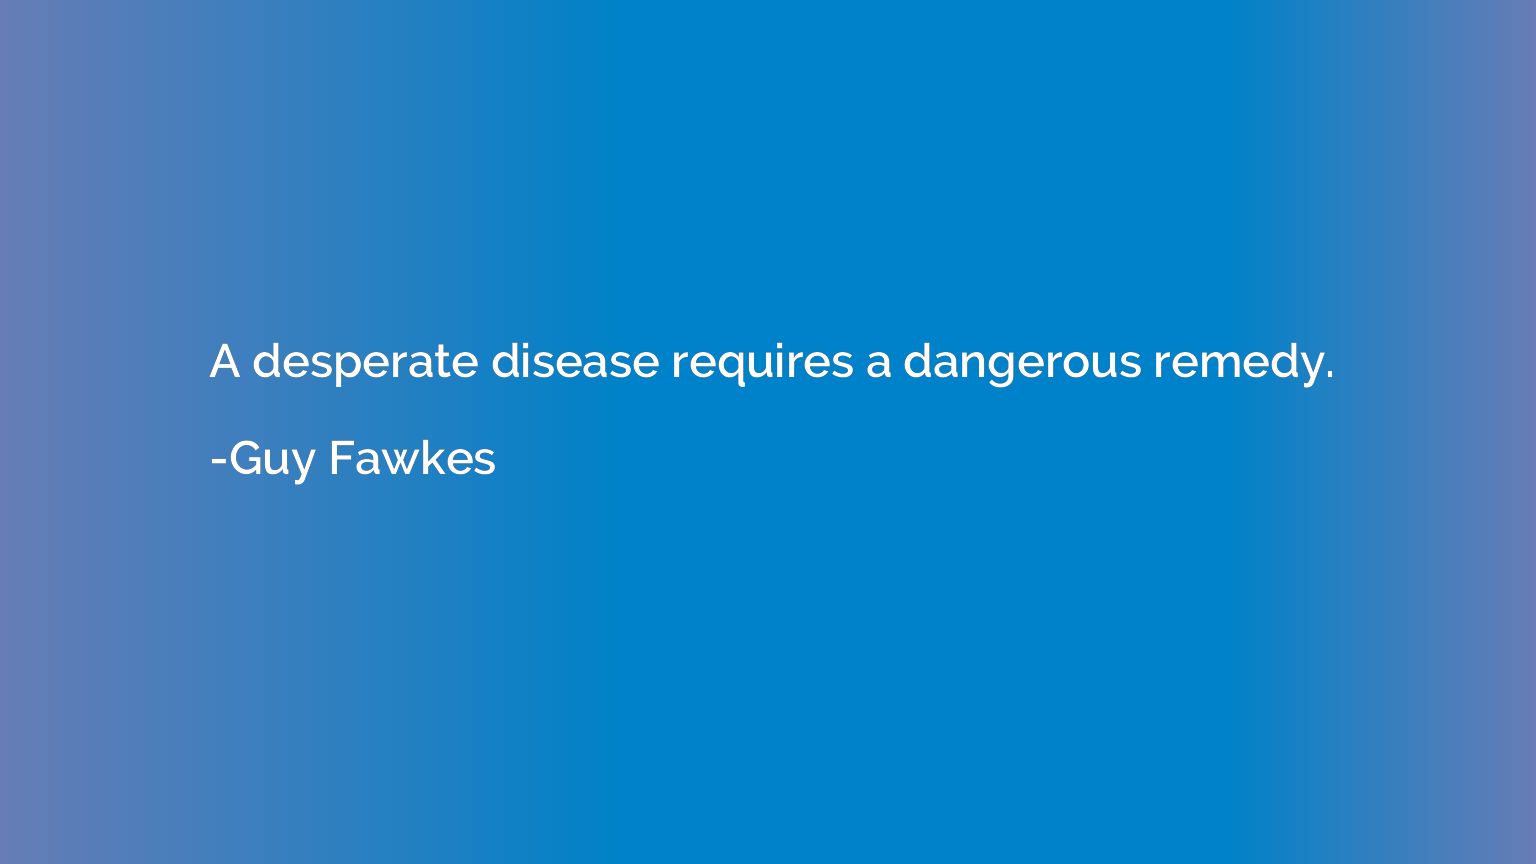 A desperate disease requires a dangerous remedy.